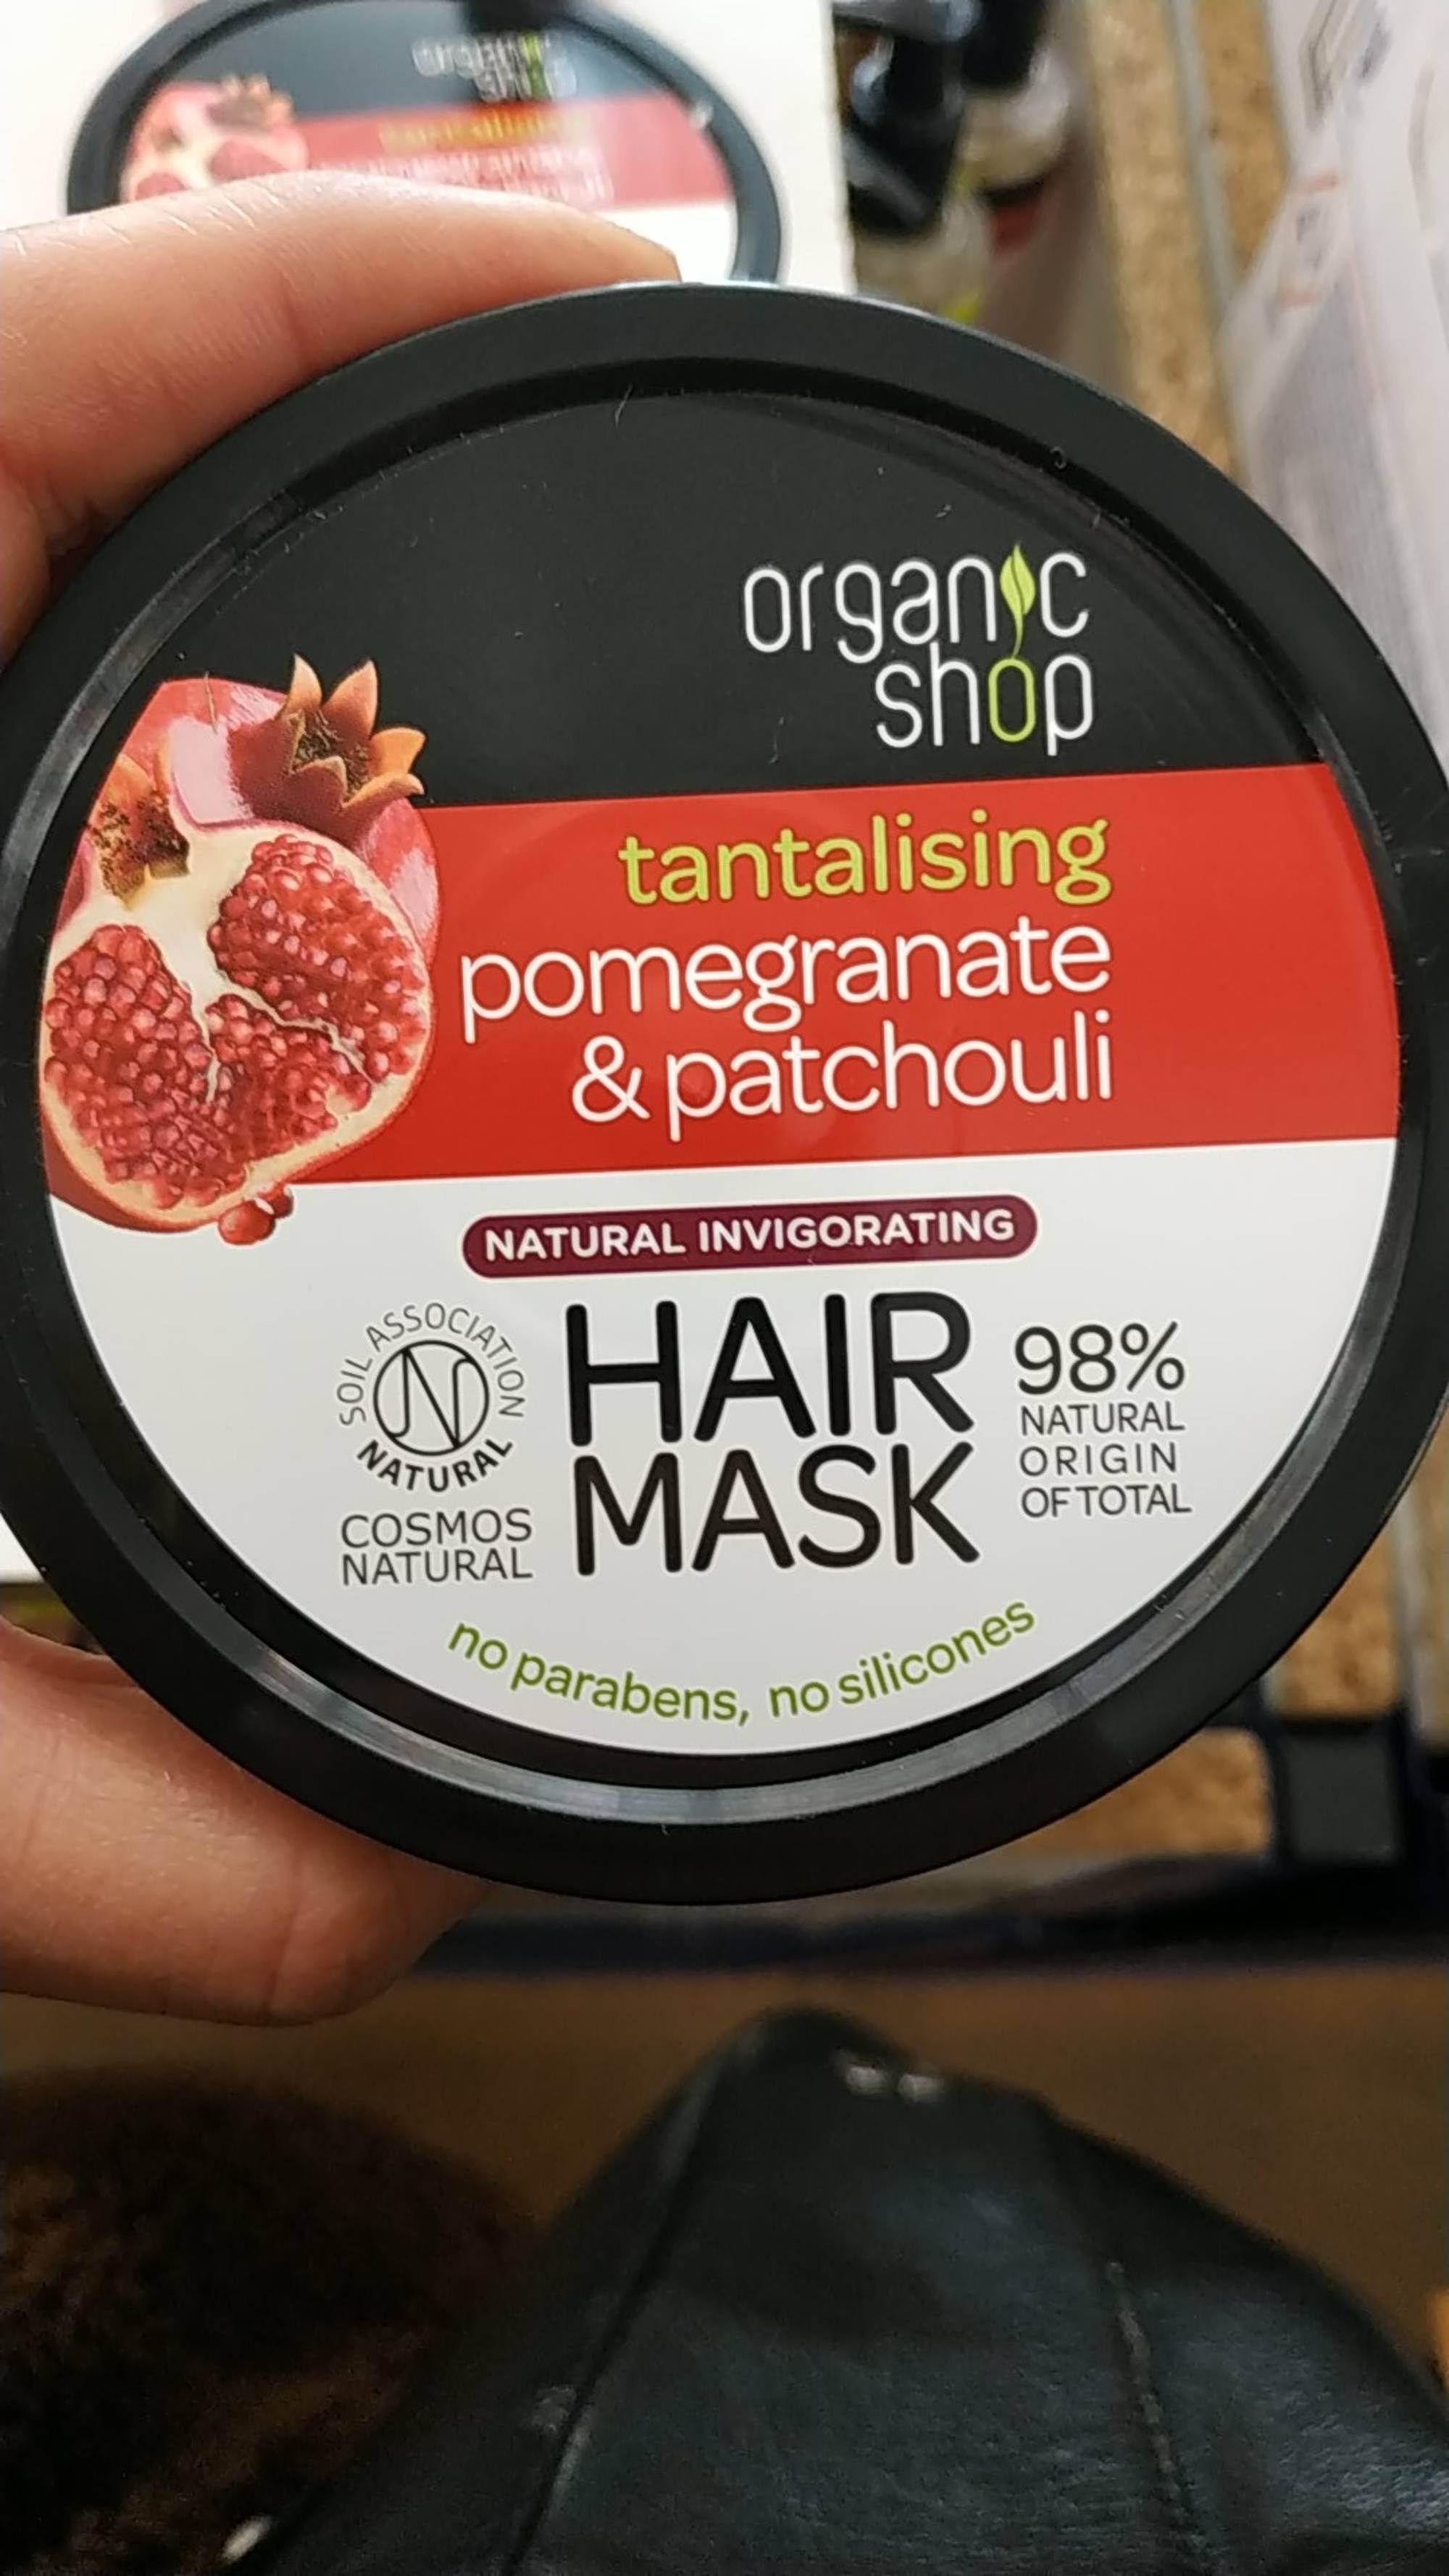 ORGANIC SHOP - Tantalising pomegranate & patchouli - Hair mask